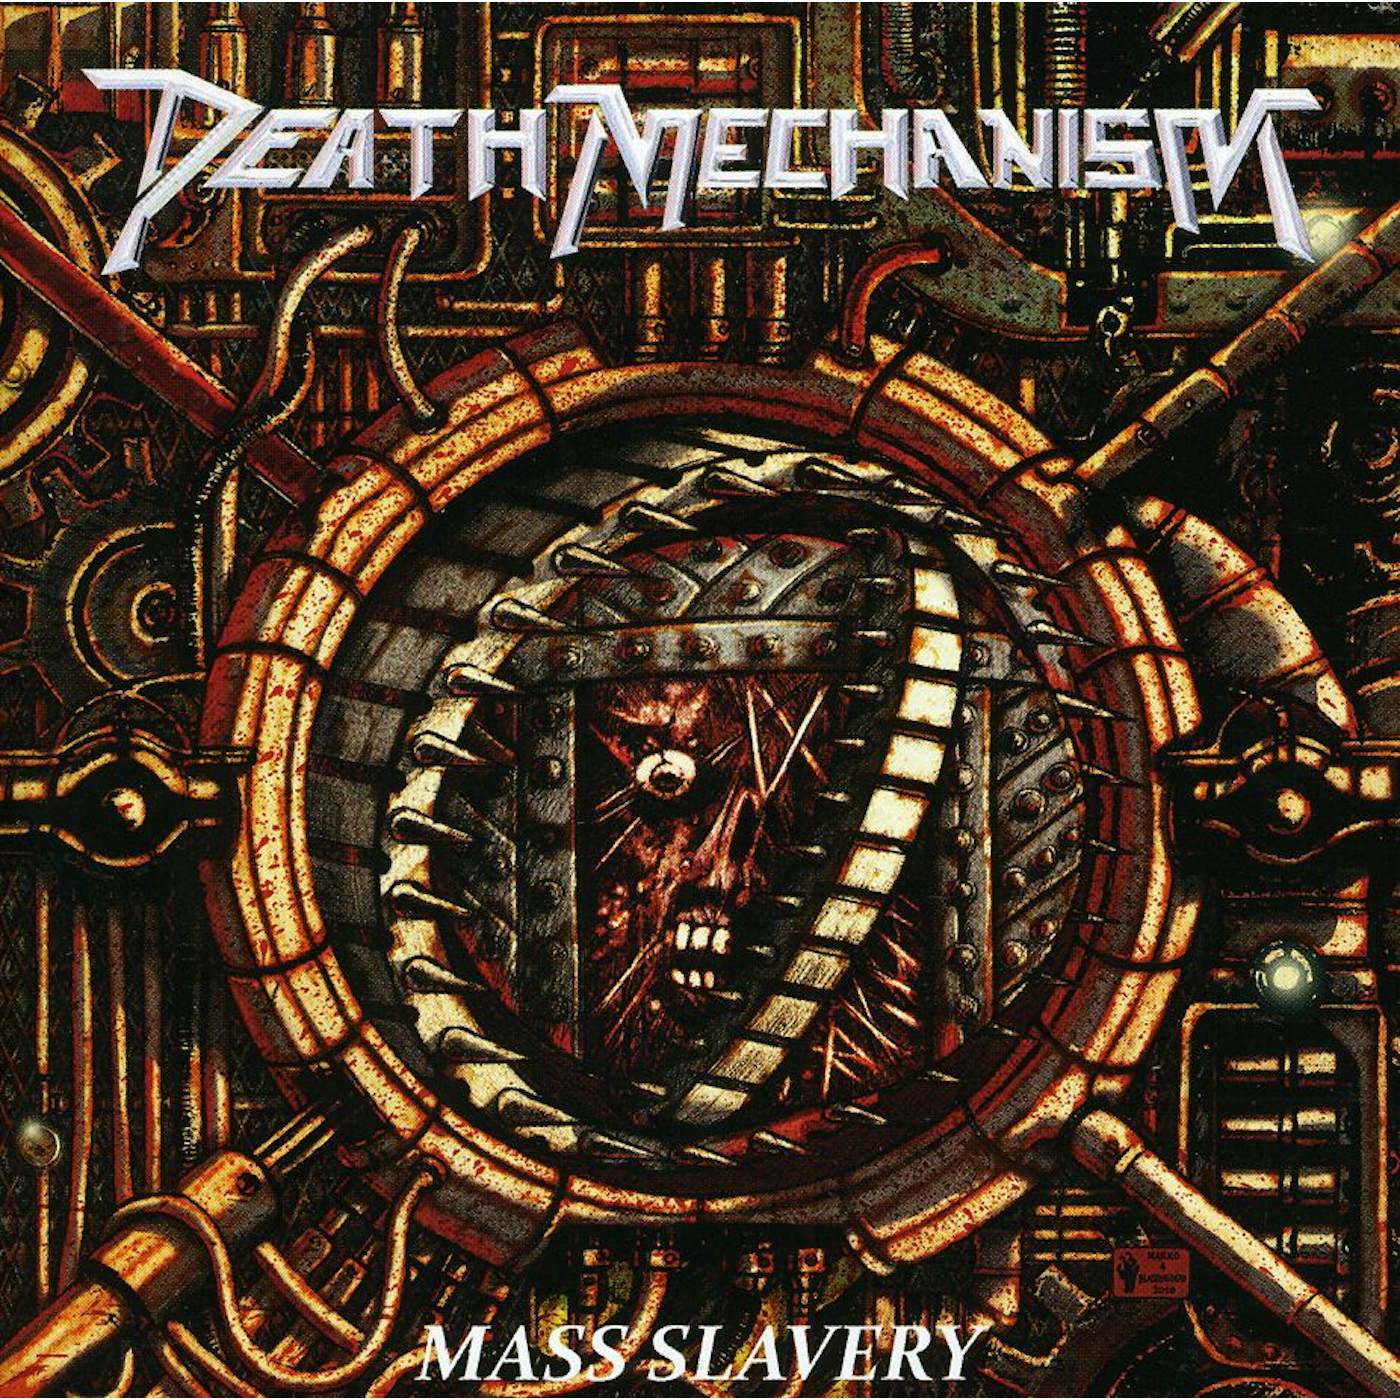 DEATH MECHANISM CD